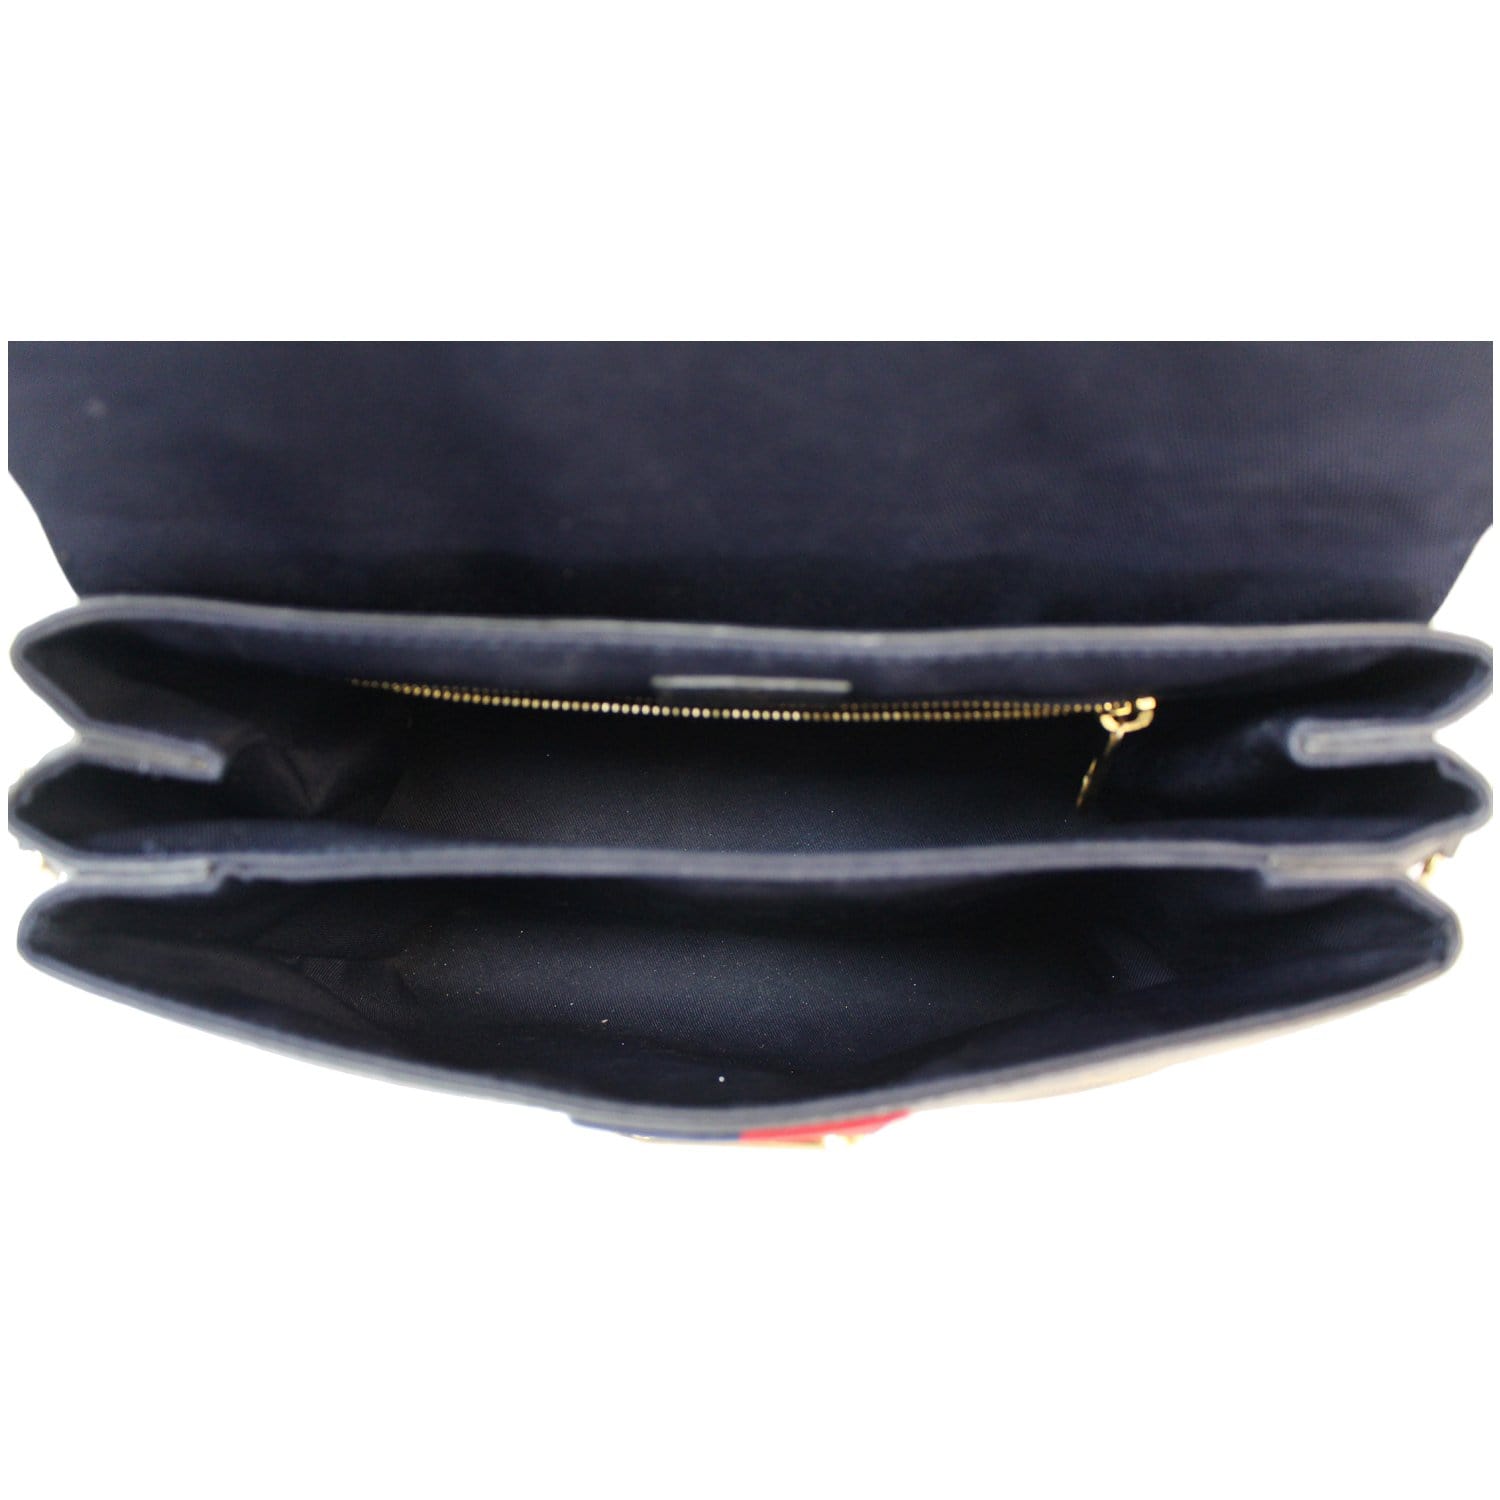 Georges cloth handbag Louis Vuitton Brown in Cloth - 21056105